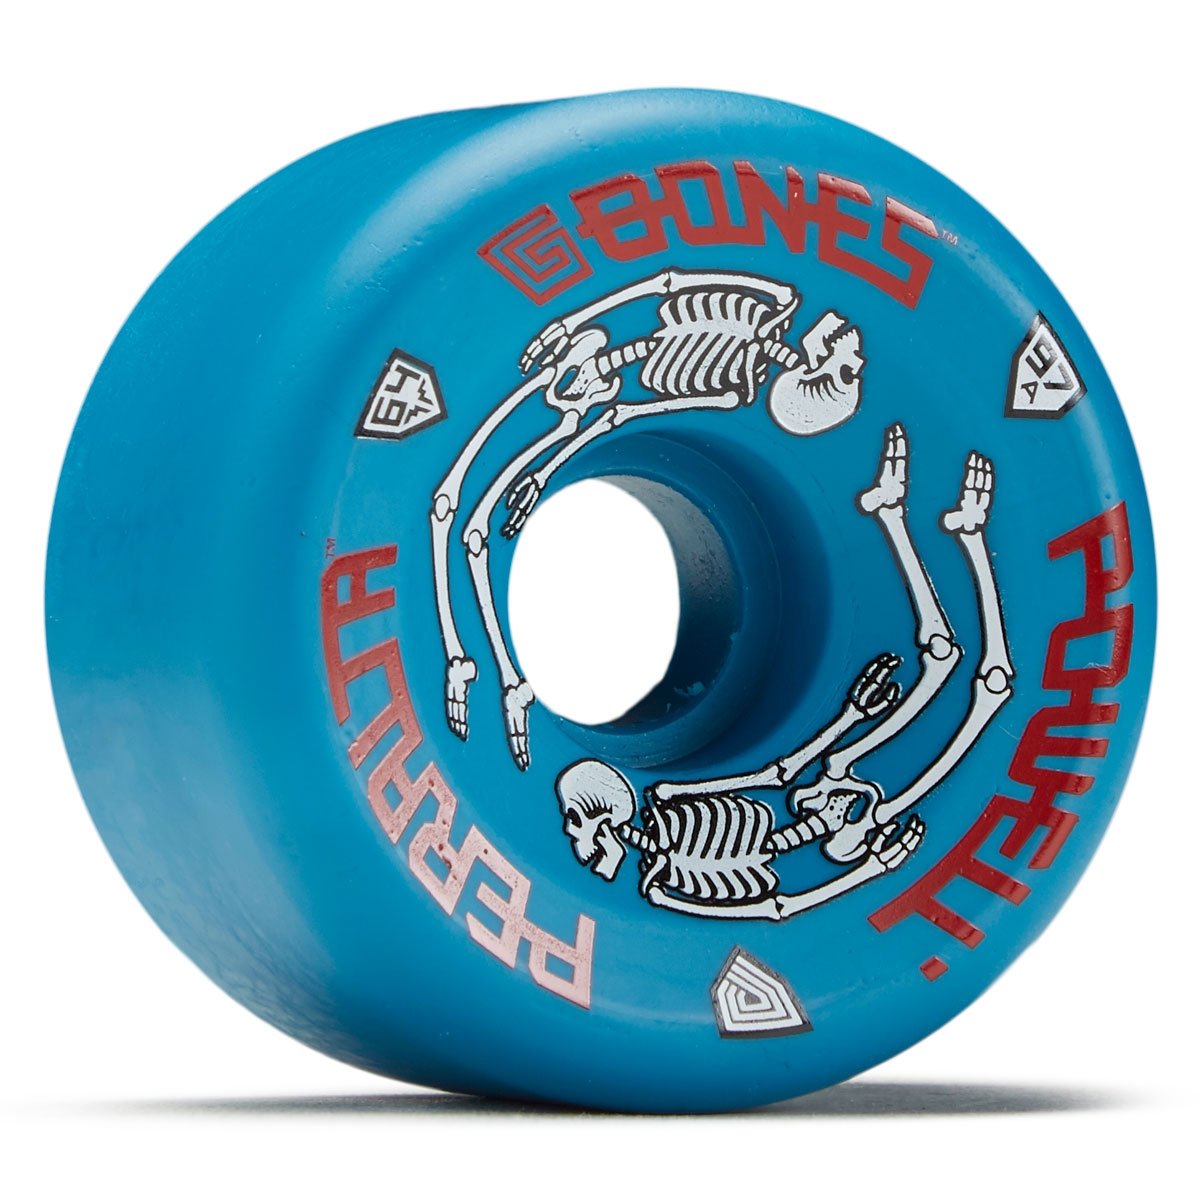 Powell-Peralta G Bones 97A Skateboard Wheels - Blue - 64mm image 1